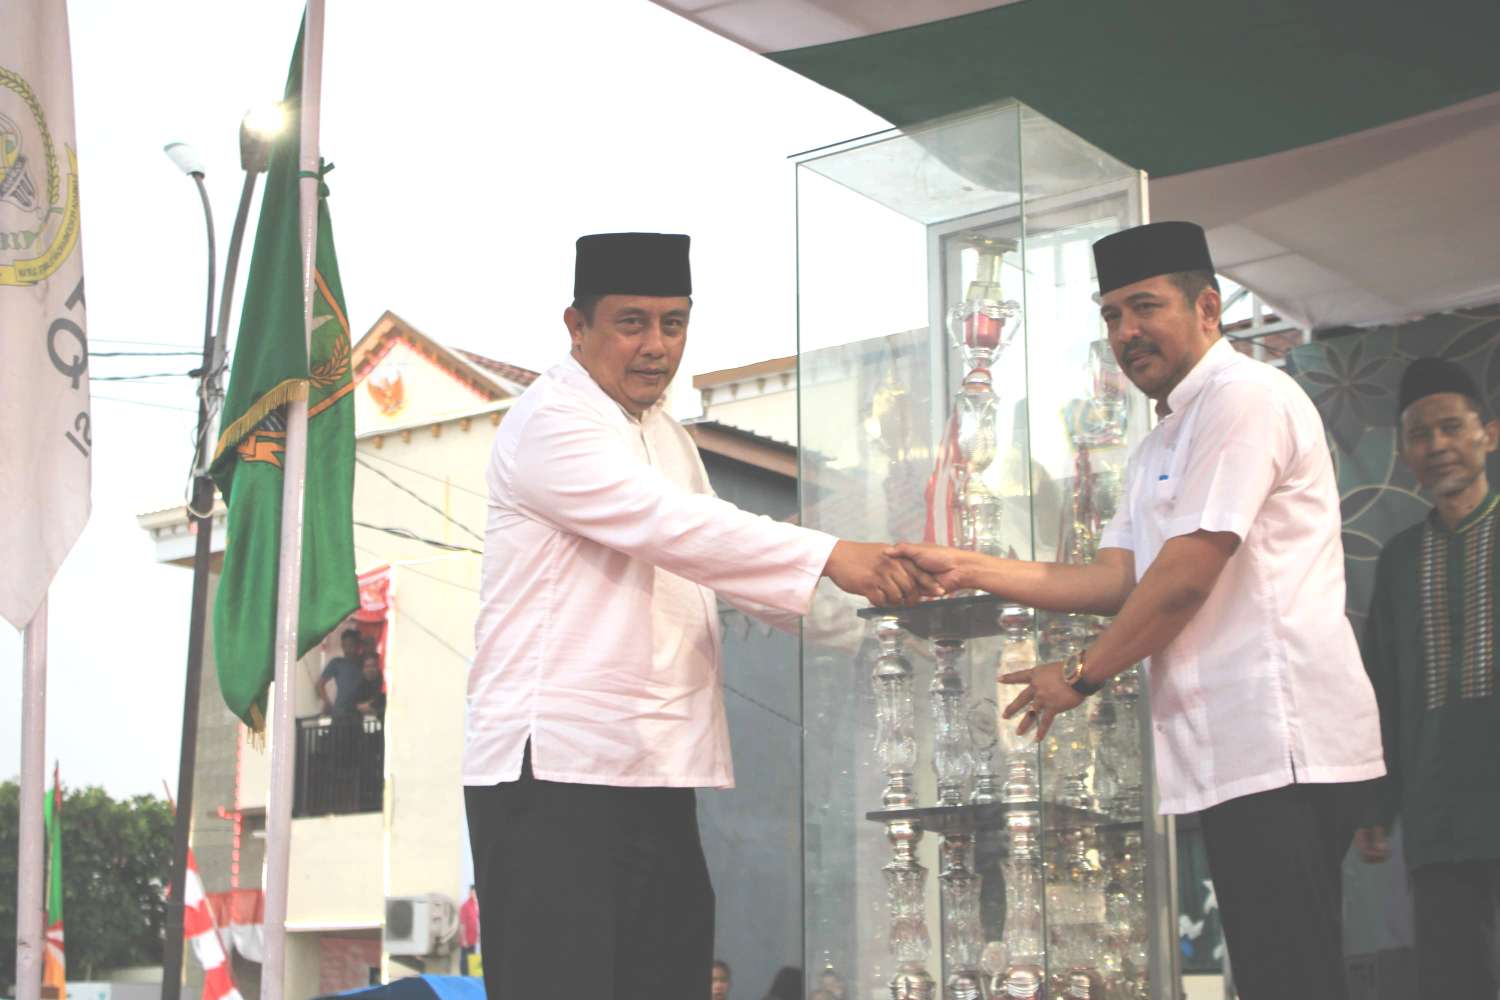 Raih Juara Umum MTQ Kabupaten Bekasi, Cikarang Barat Siapkan Qori-qoriah untuk MTQ Jawa Barat